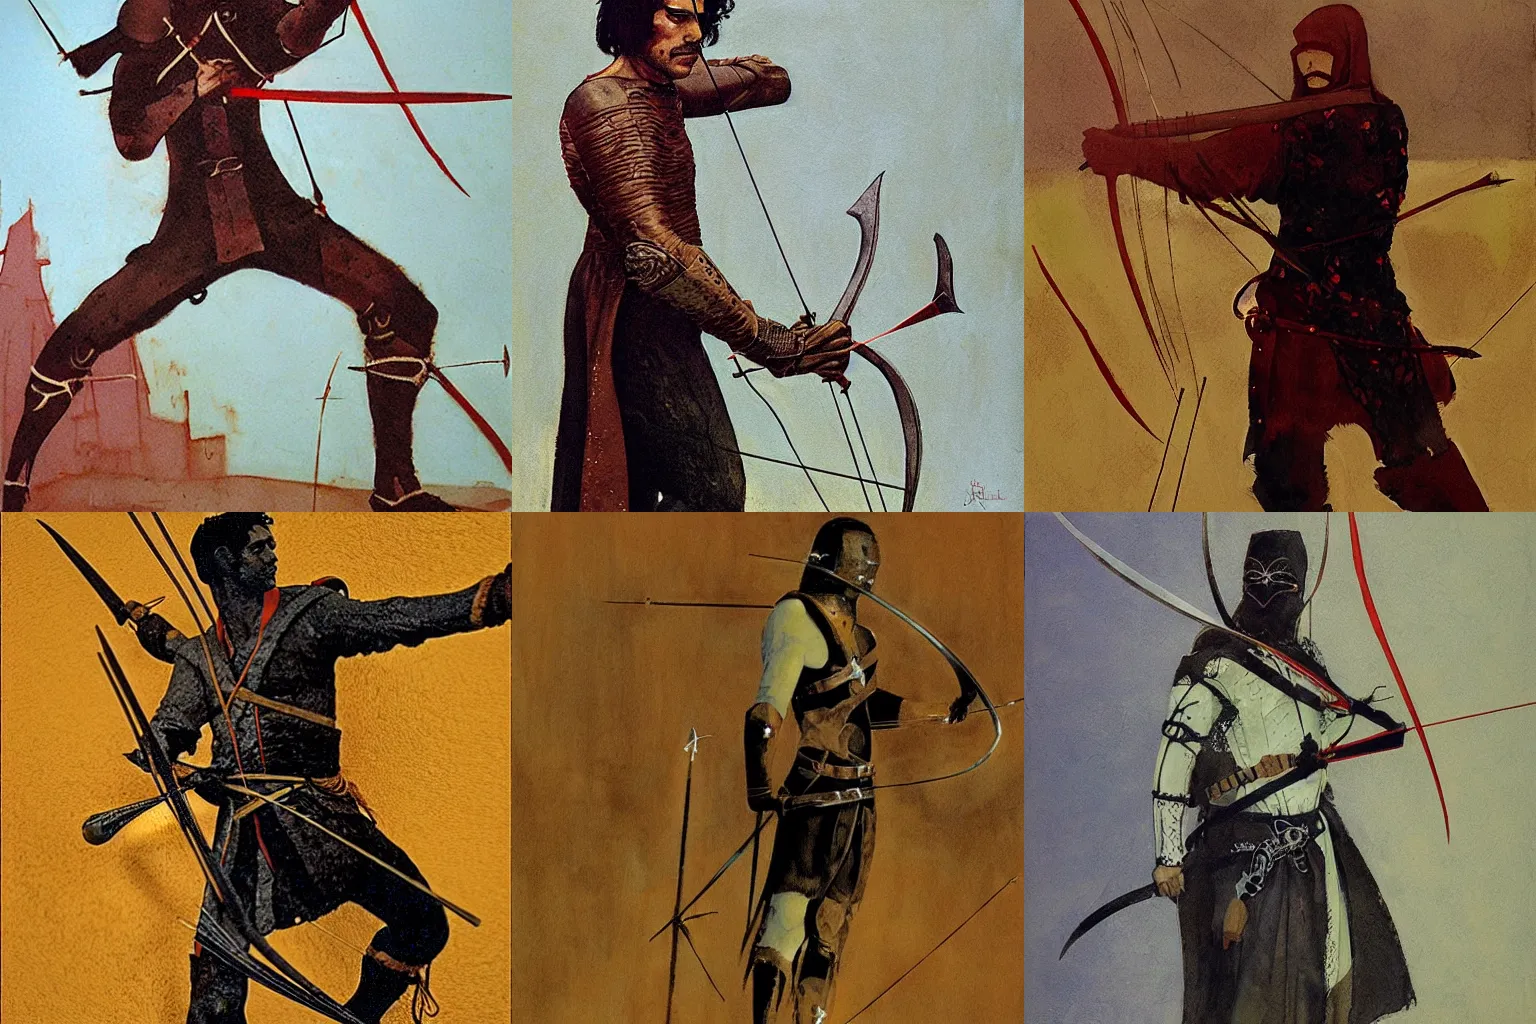 Prompt: medieval archer by jeffery catherine jones